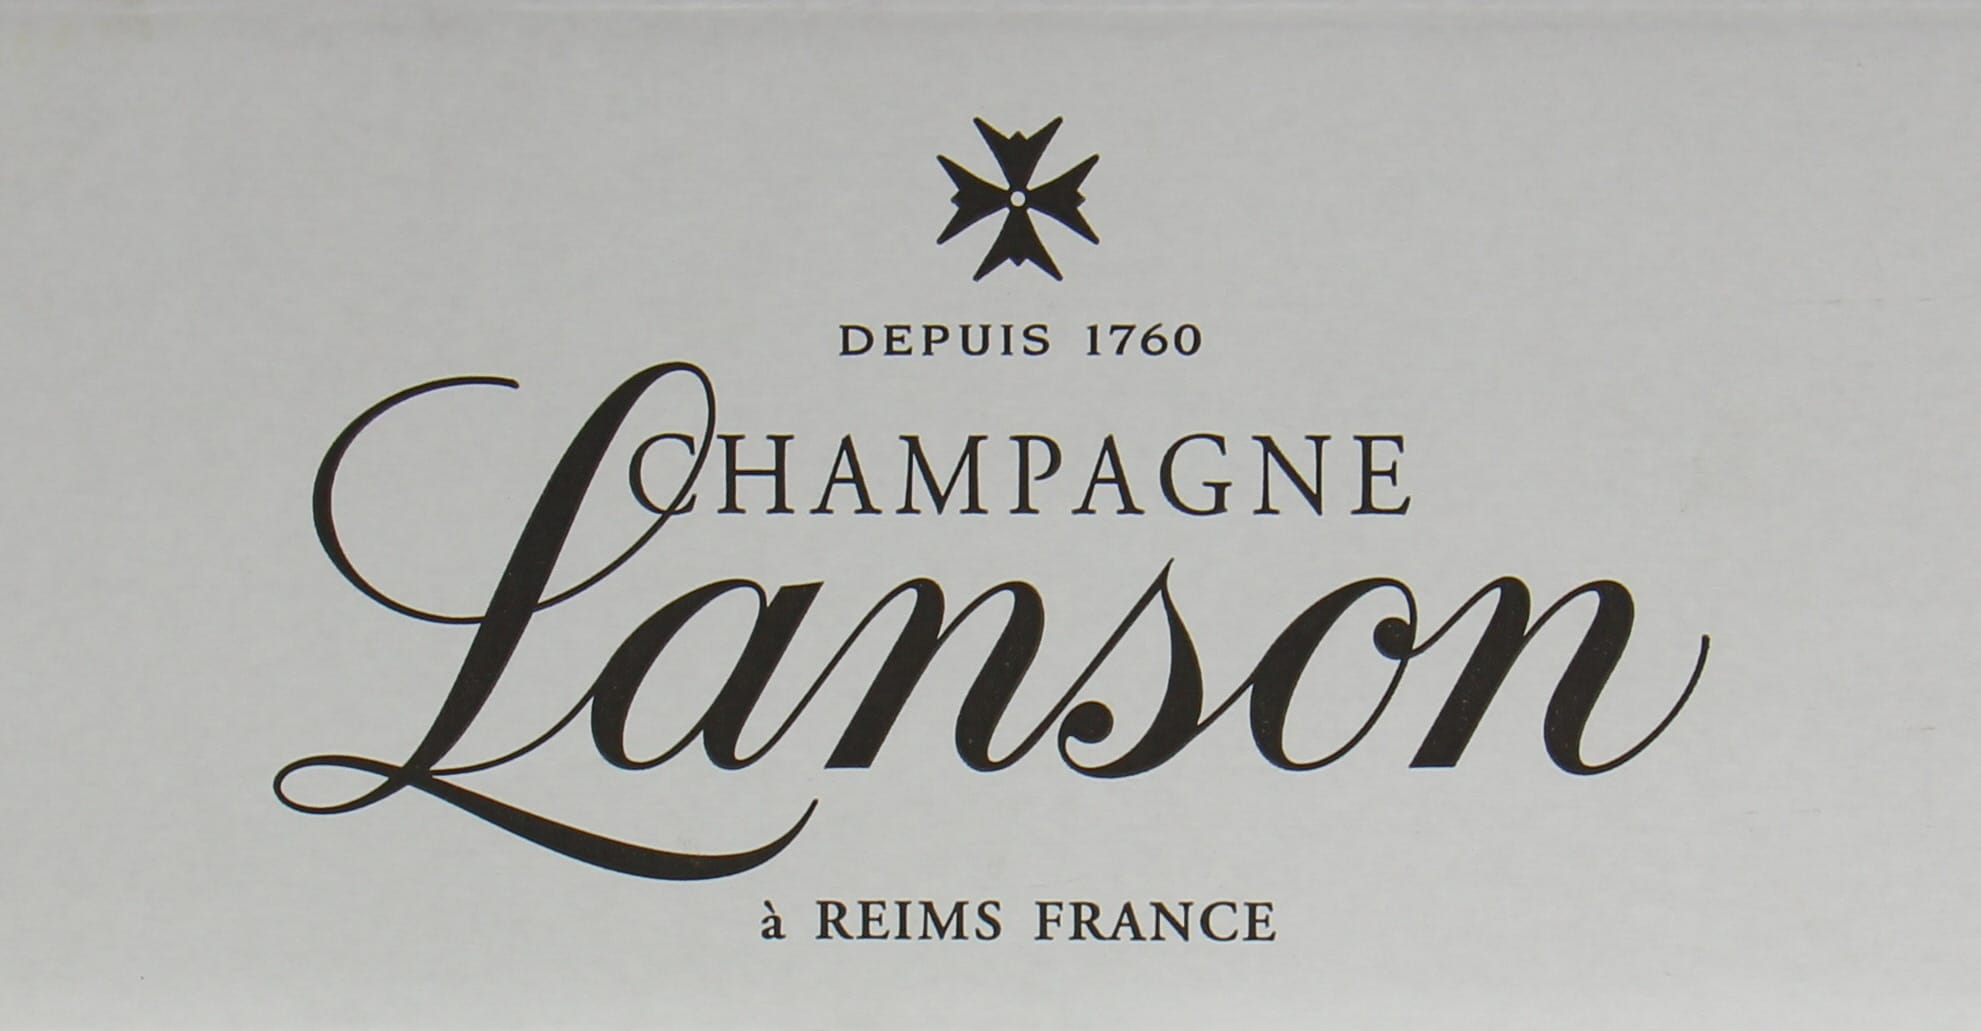 Lanson - Brut Champagne Gold Label 1988